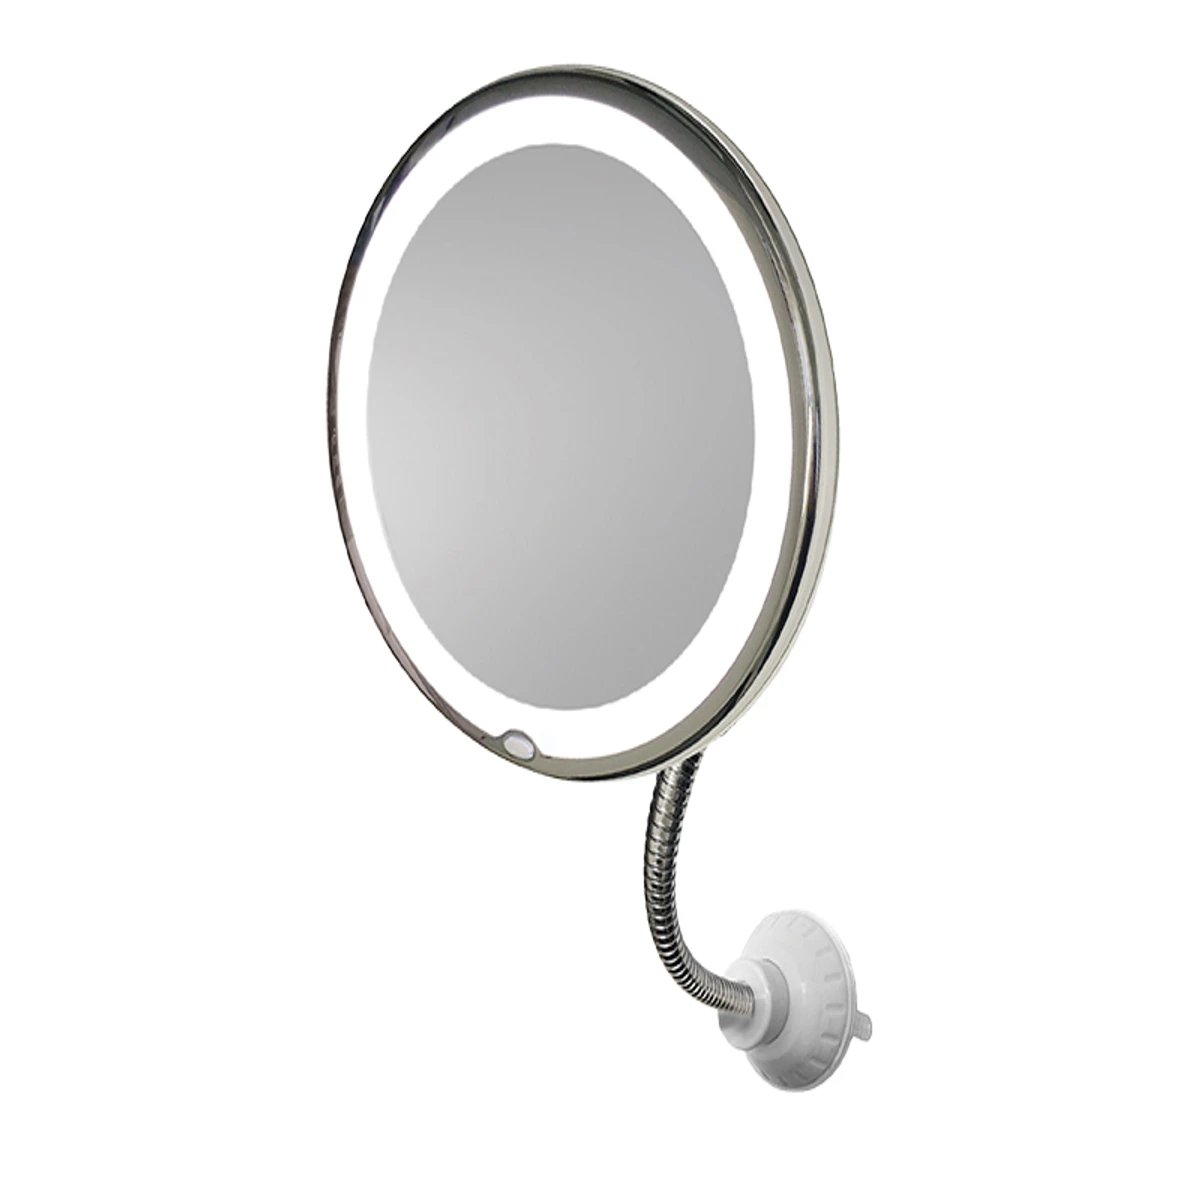 Makeup Mirror LED Light Flexible Vanity Mirror Light 10X Magnifying Mirror Portable Illuminated Mirror Bathroom Wall Mirror Led